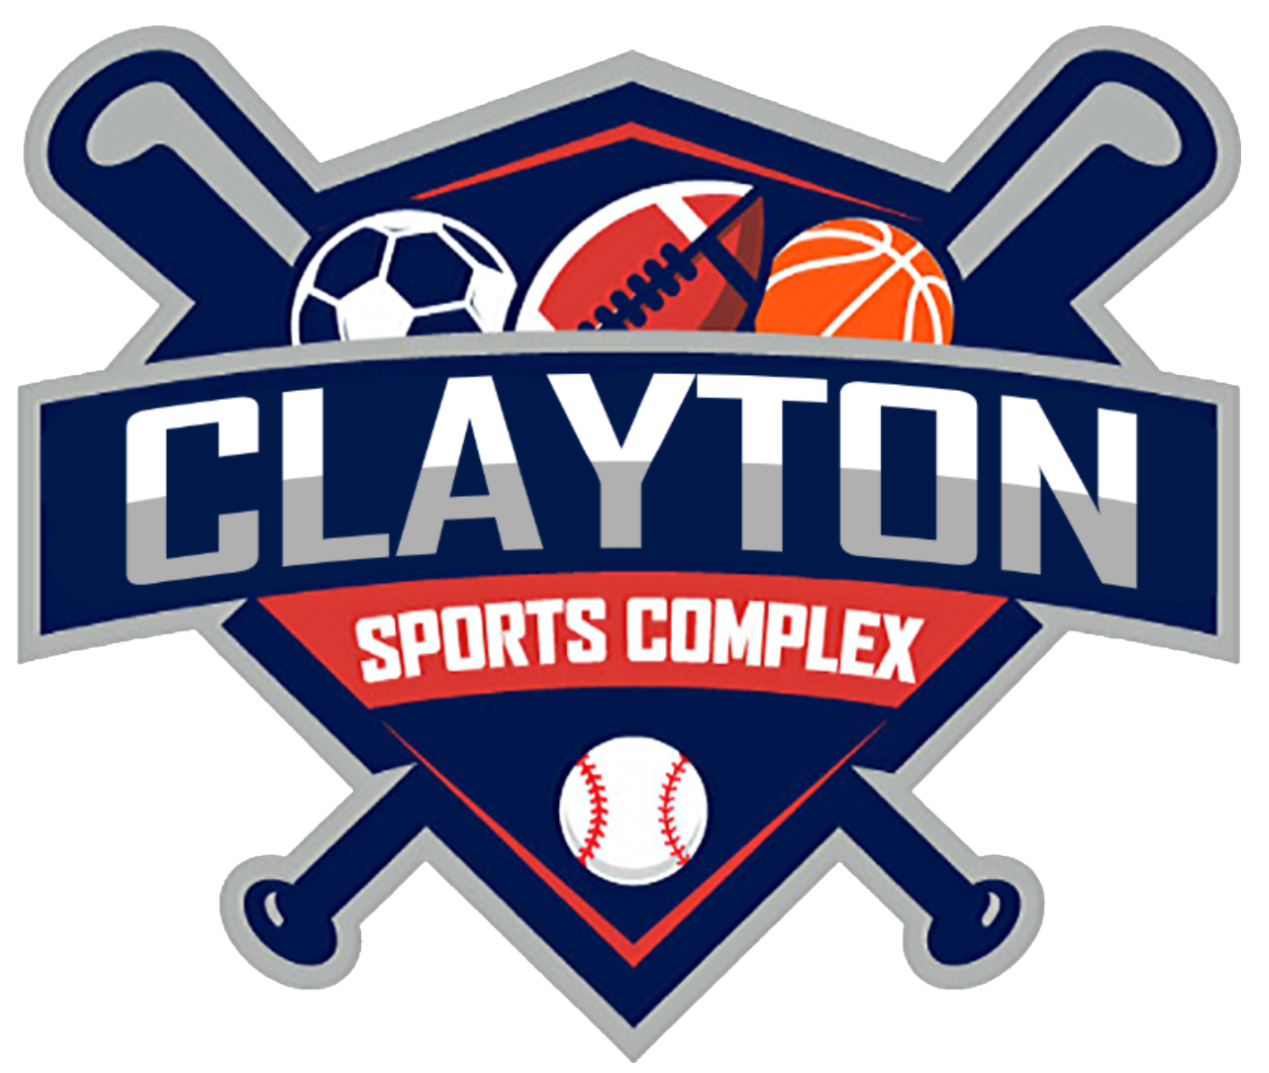 Clayton Sports Complex logo